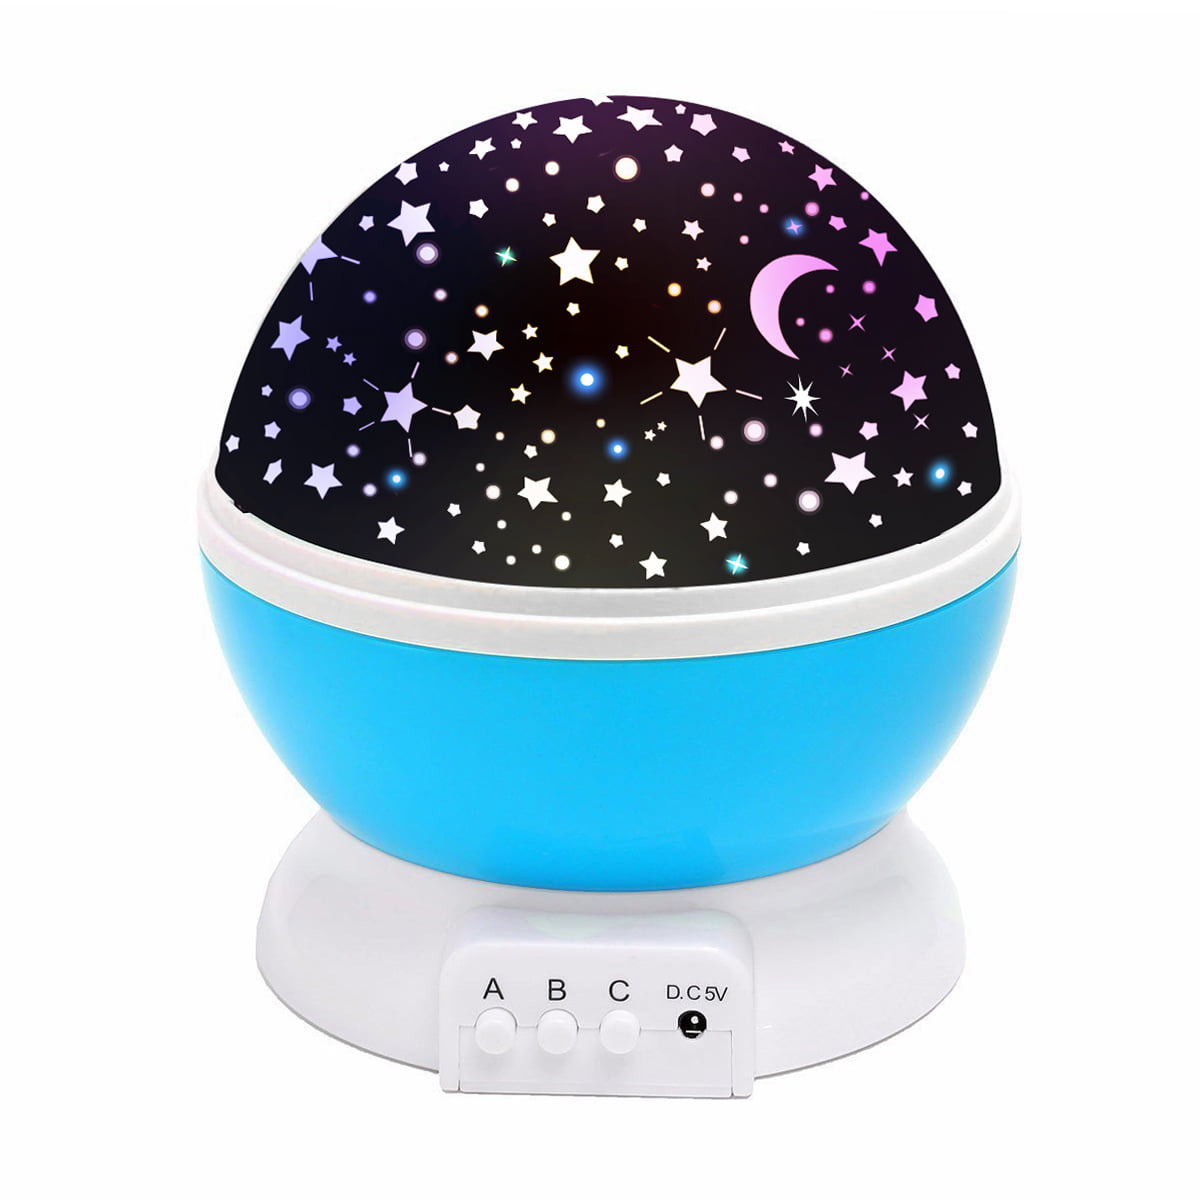 LED Projector Star Moon Galaxy Night Light For Children Kids Room Sky Rotating B 